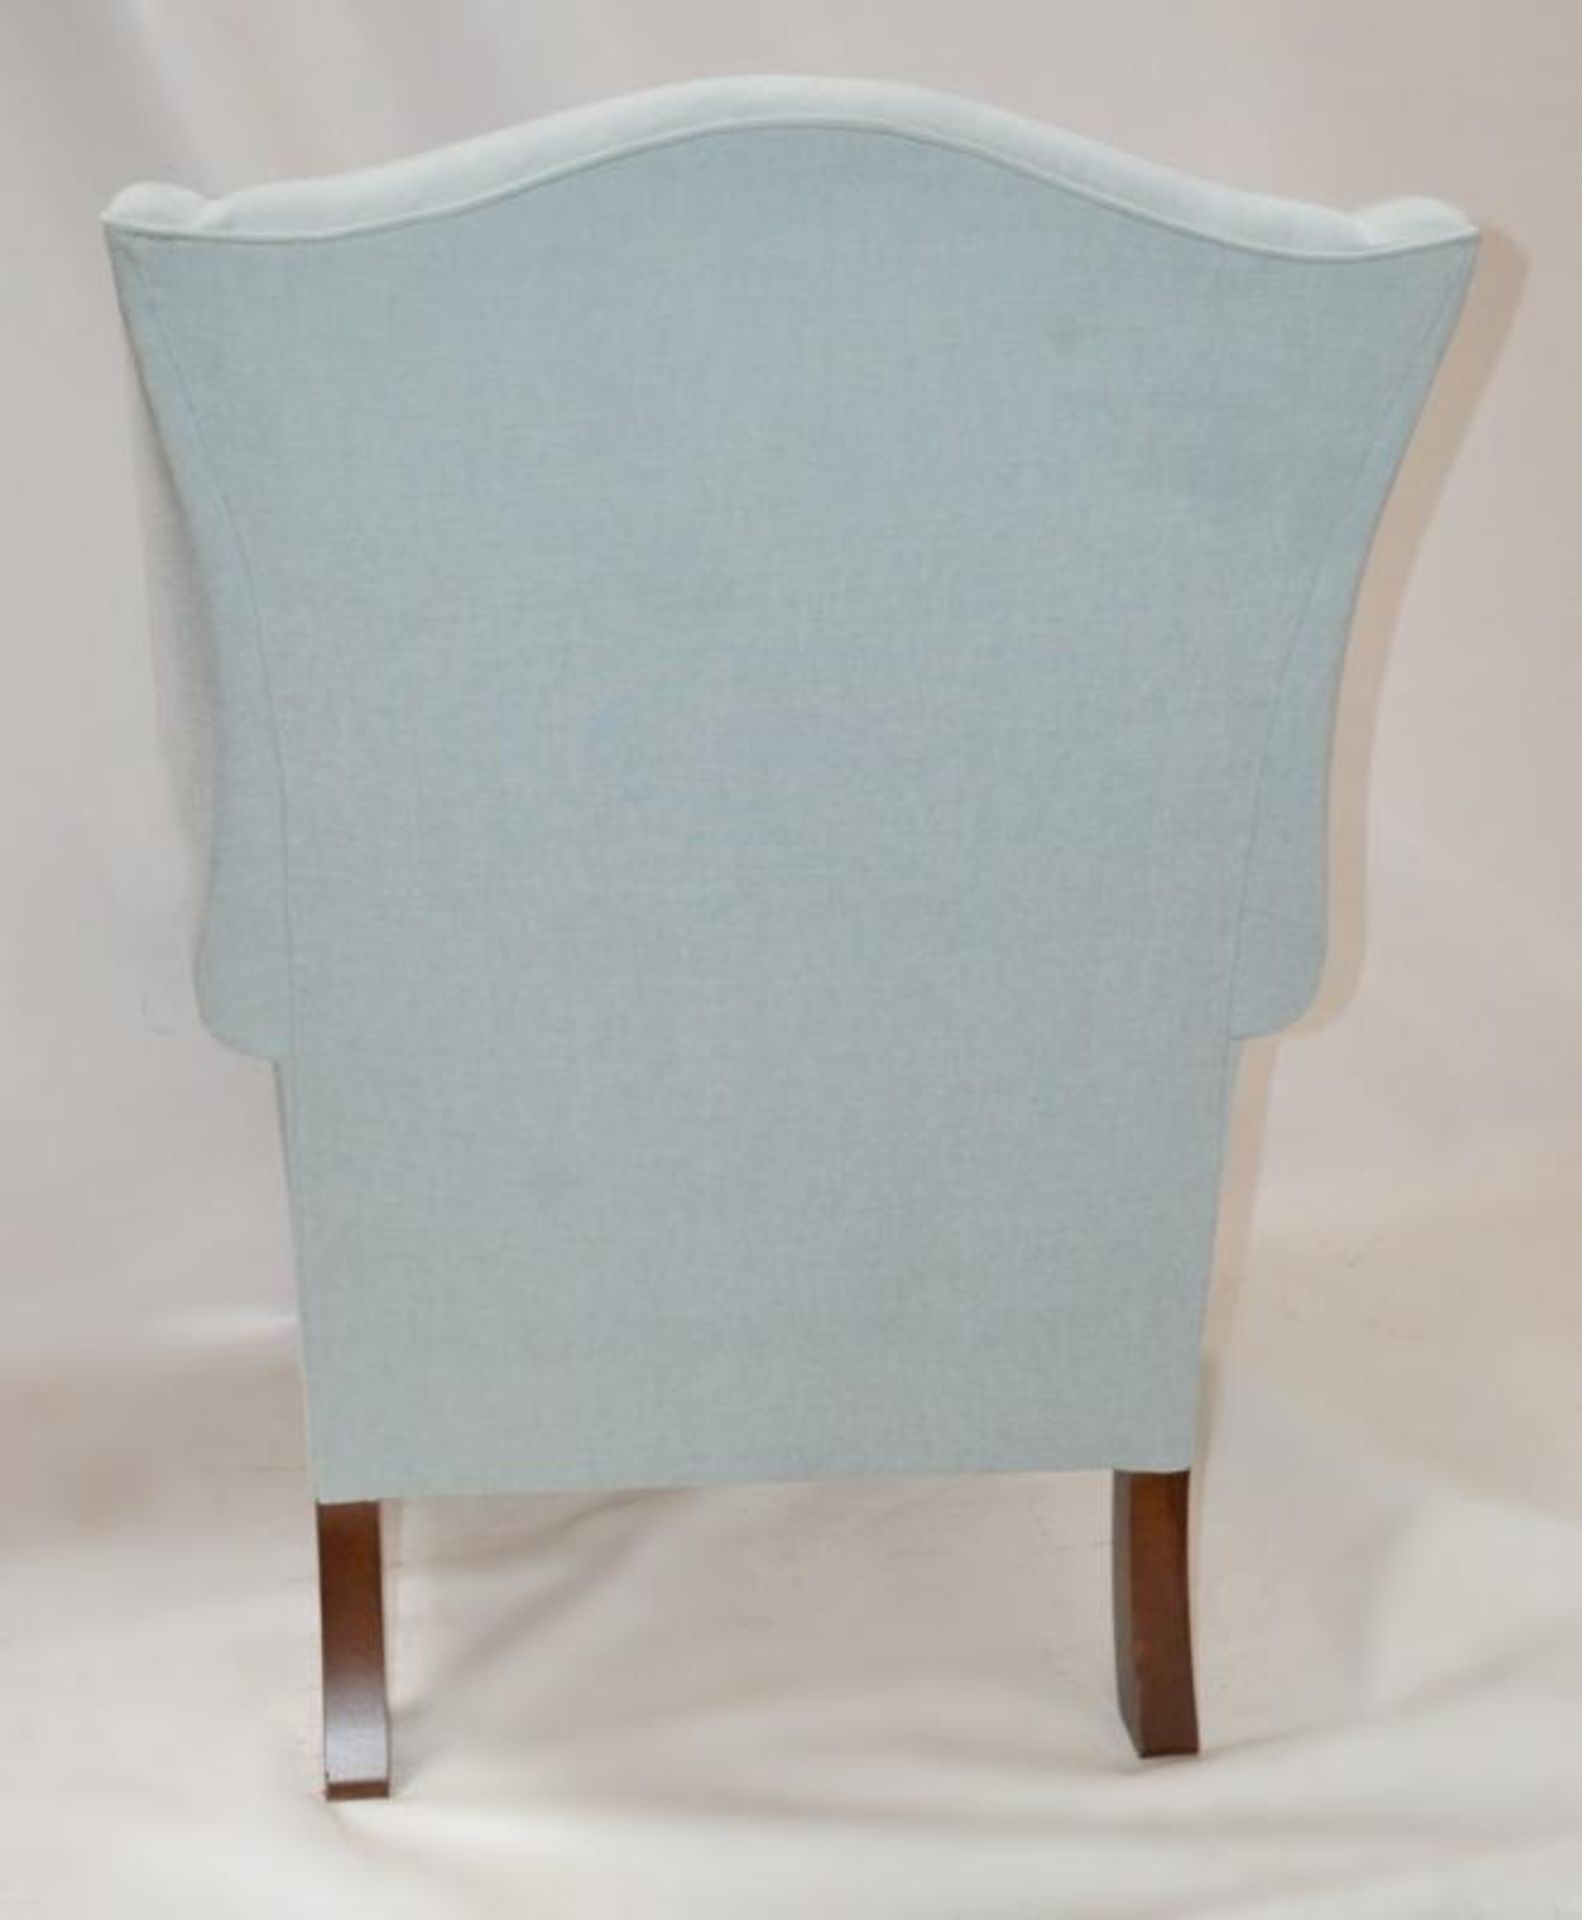 1 x Duresta "Somerset" Wing Chair Light Blue - Please Read Description - Dimensions: 113H x 91W x 92 - Image 3 of 10